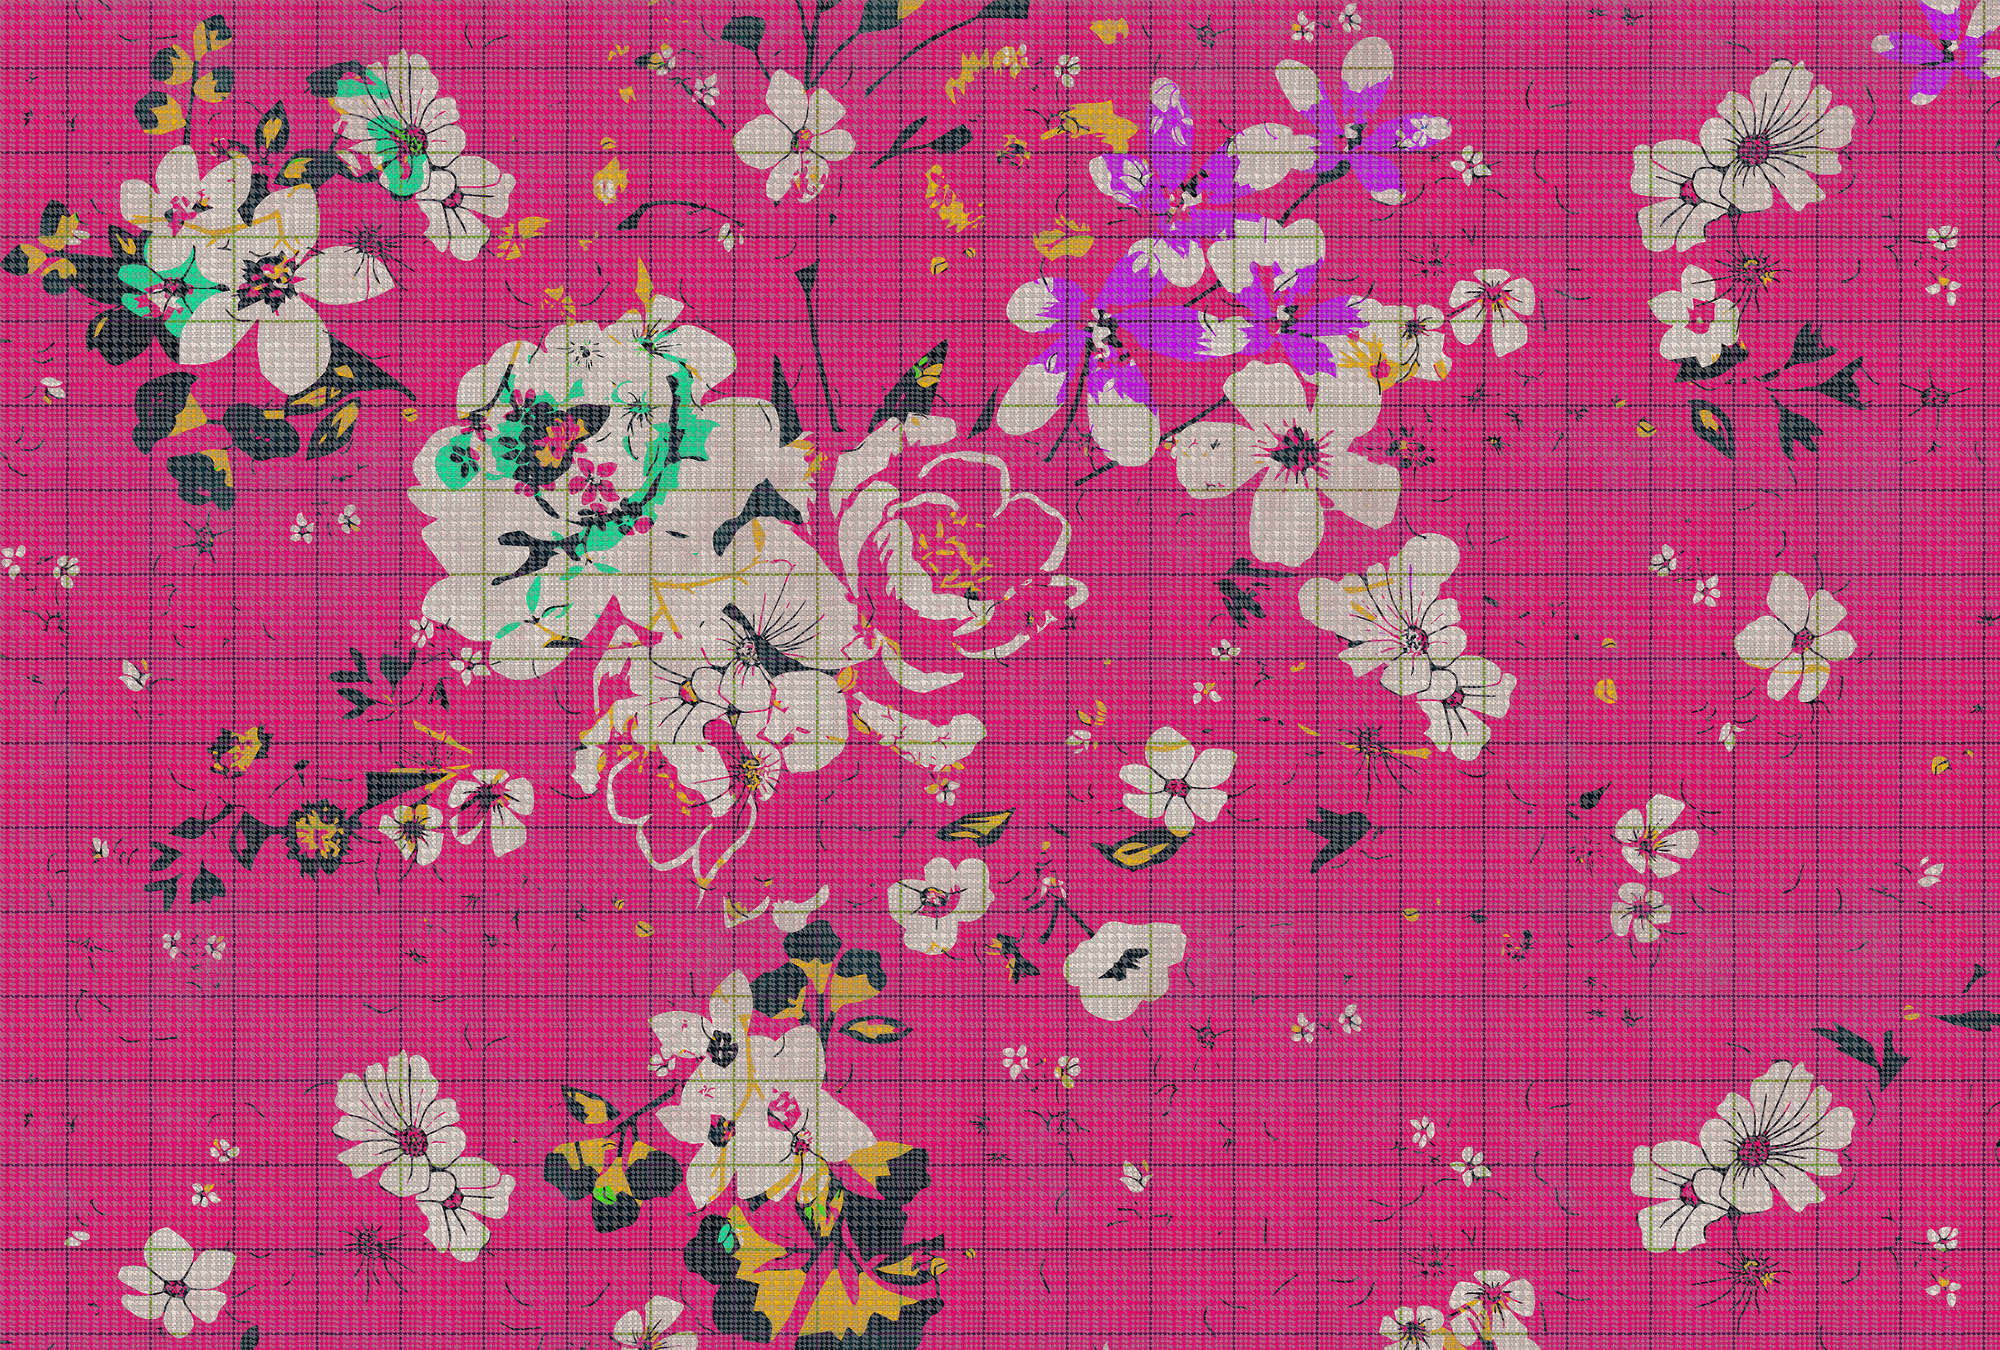             Flower plaid 2 - Fototapete in karierter Optik buntes Blumenmosaik Pink – Grün, Rosa | Premium Glattvlies
        